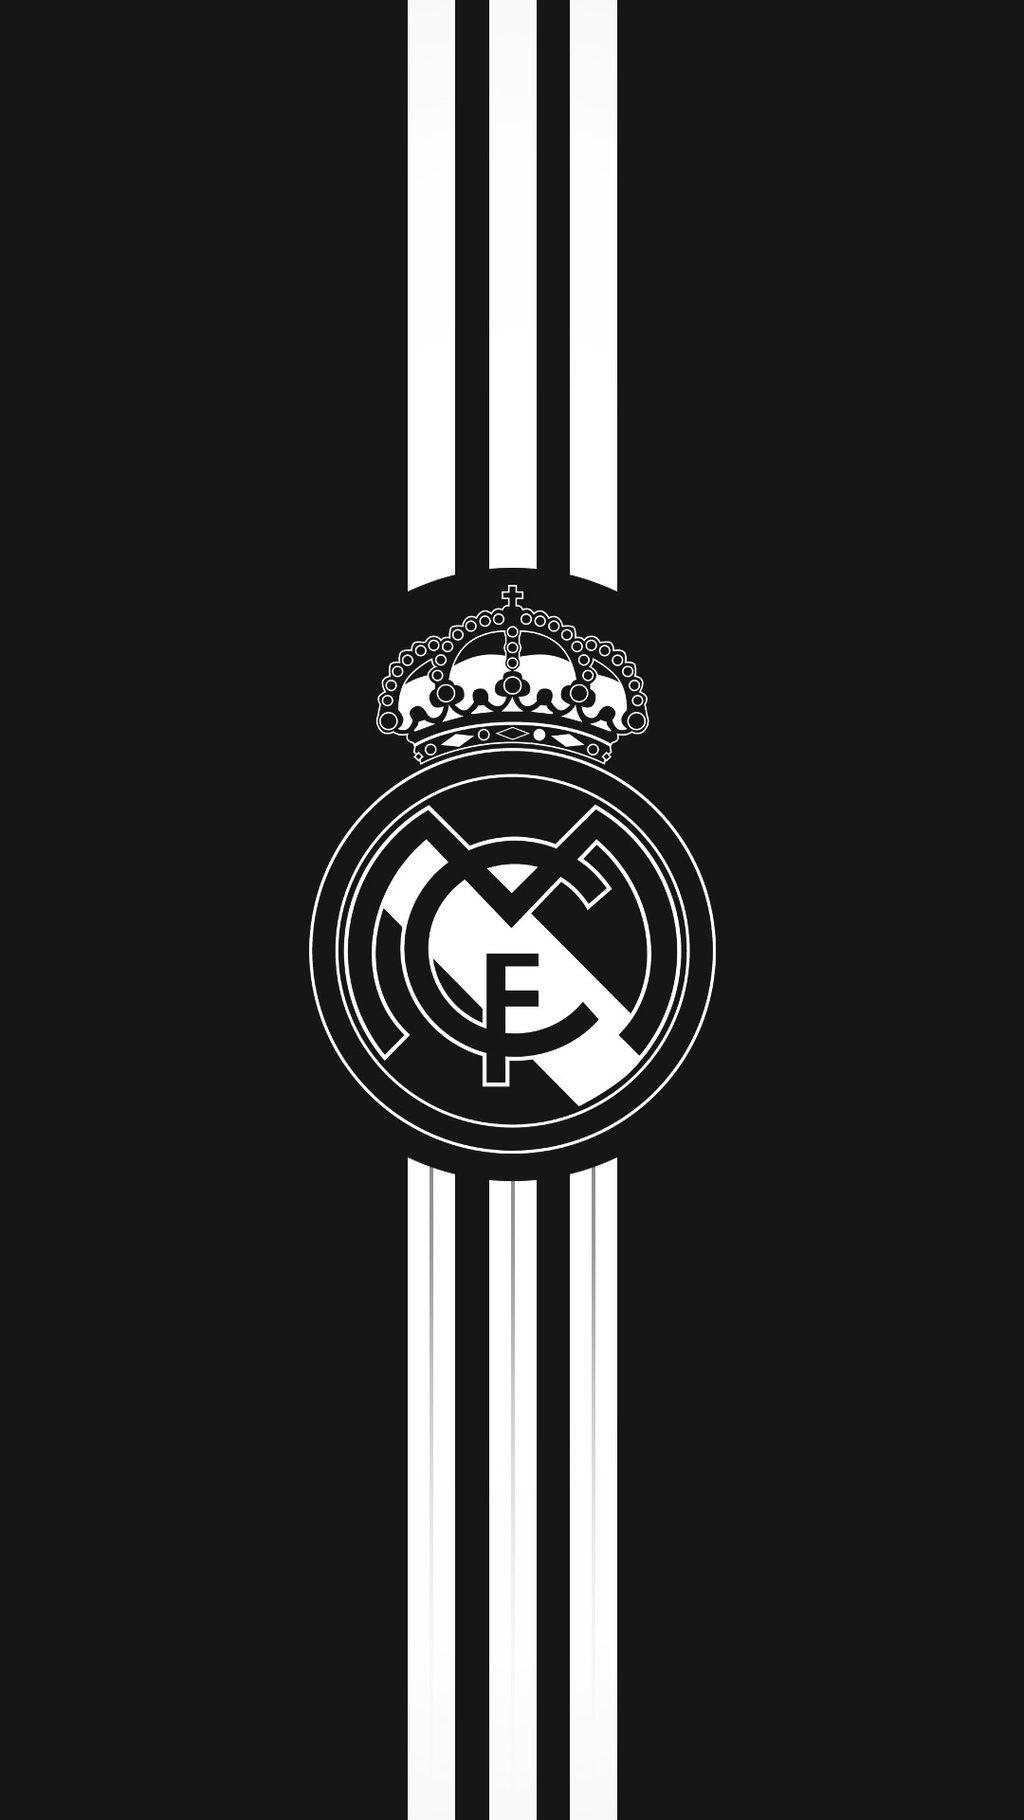 Real Madrid Wallpapers Black - Wallpaper Cave